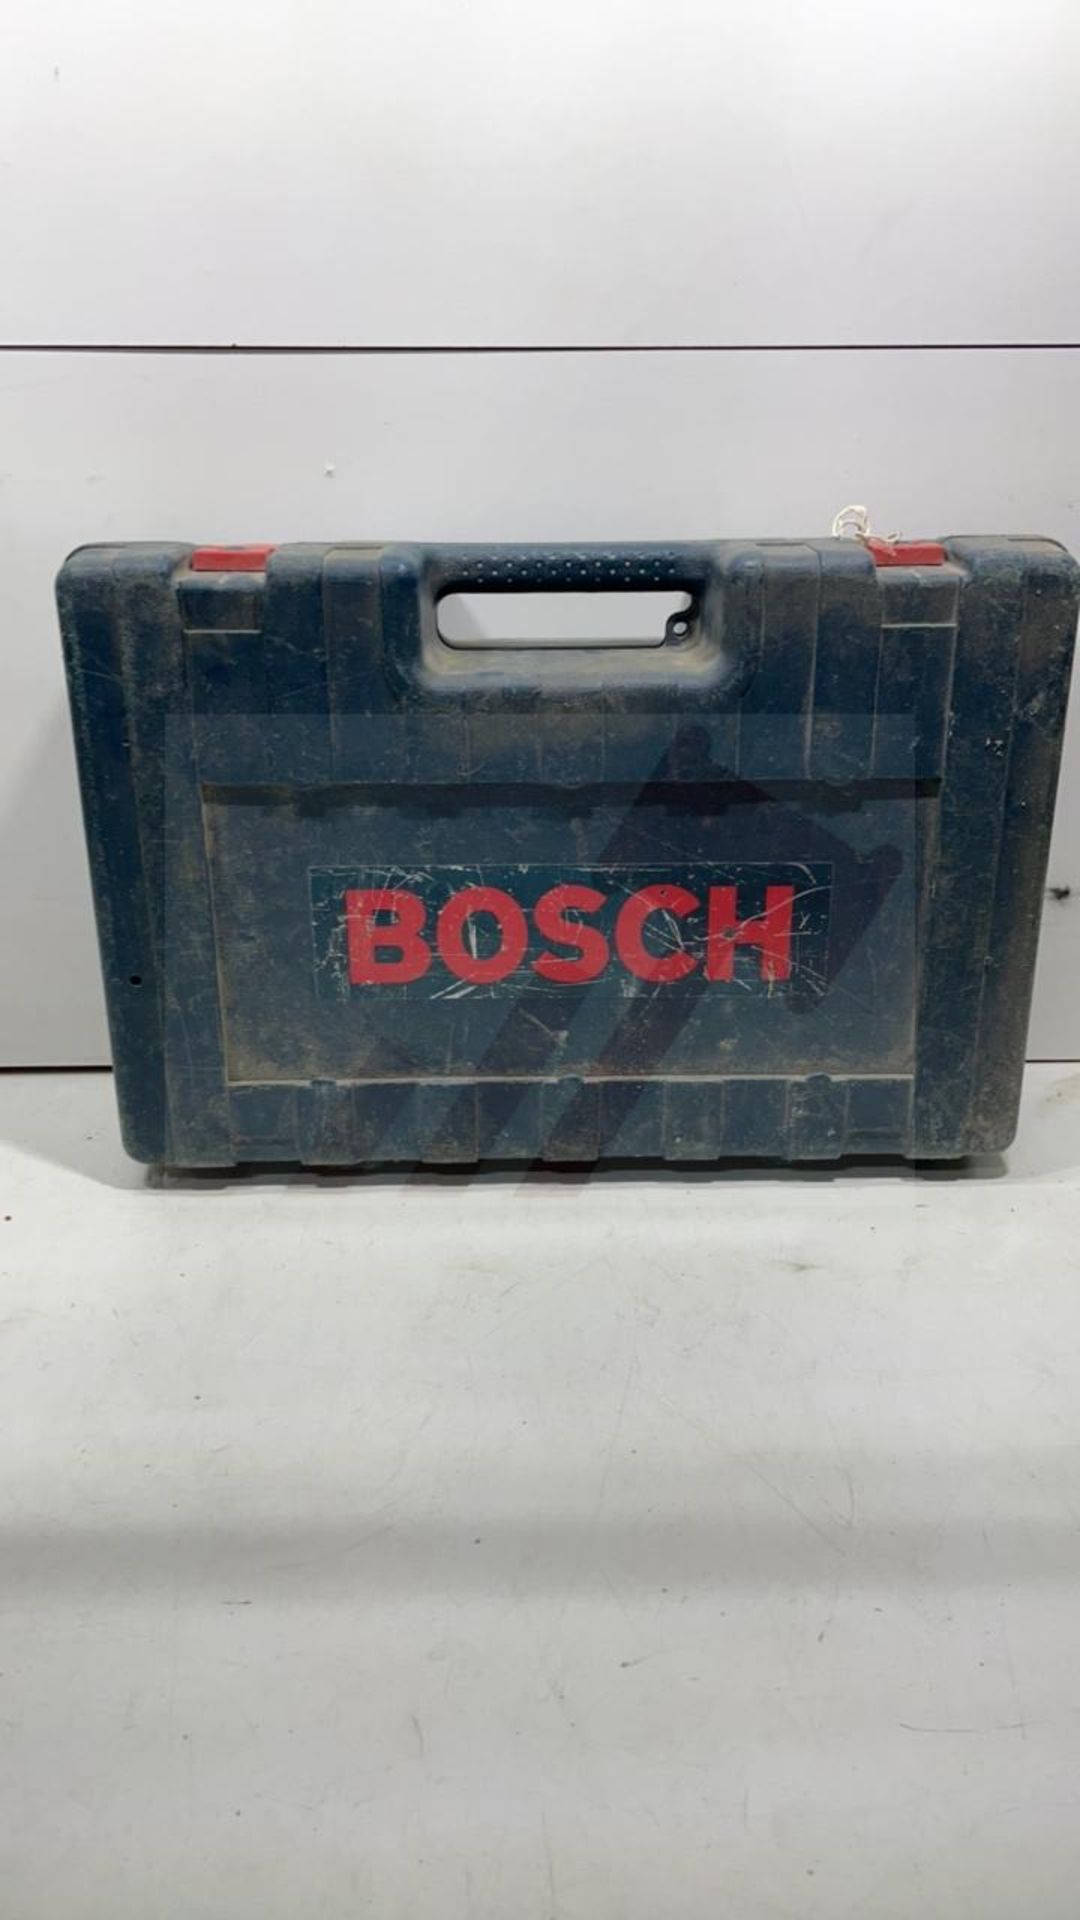 Bosch GSB 18-2-LI Plus Professional Cordless Combi Drills - Image 6 of 6